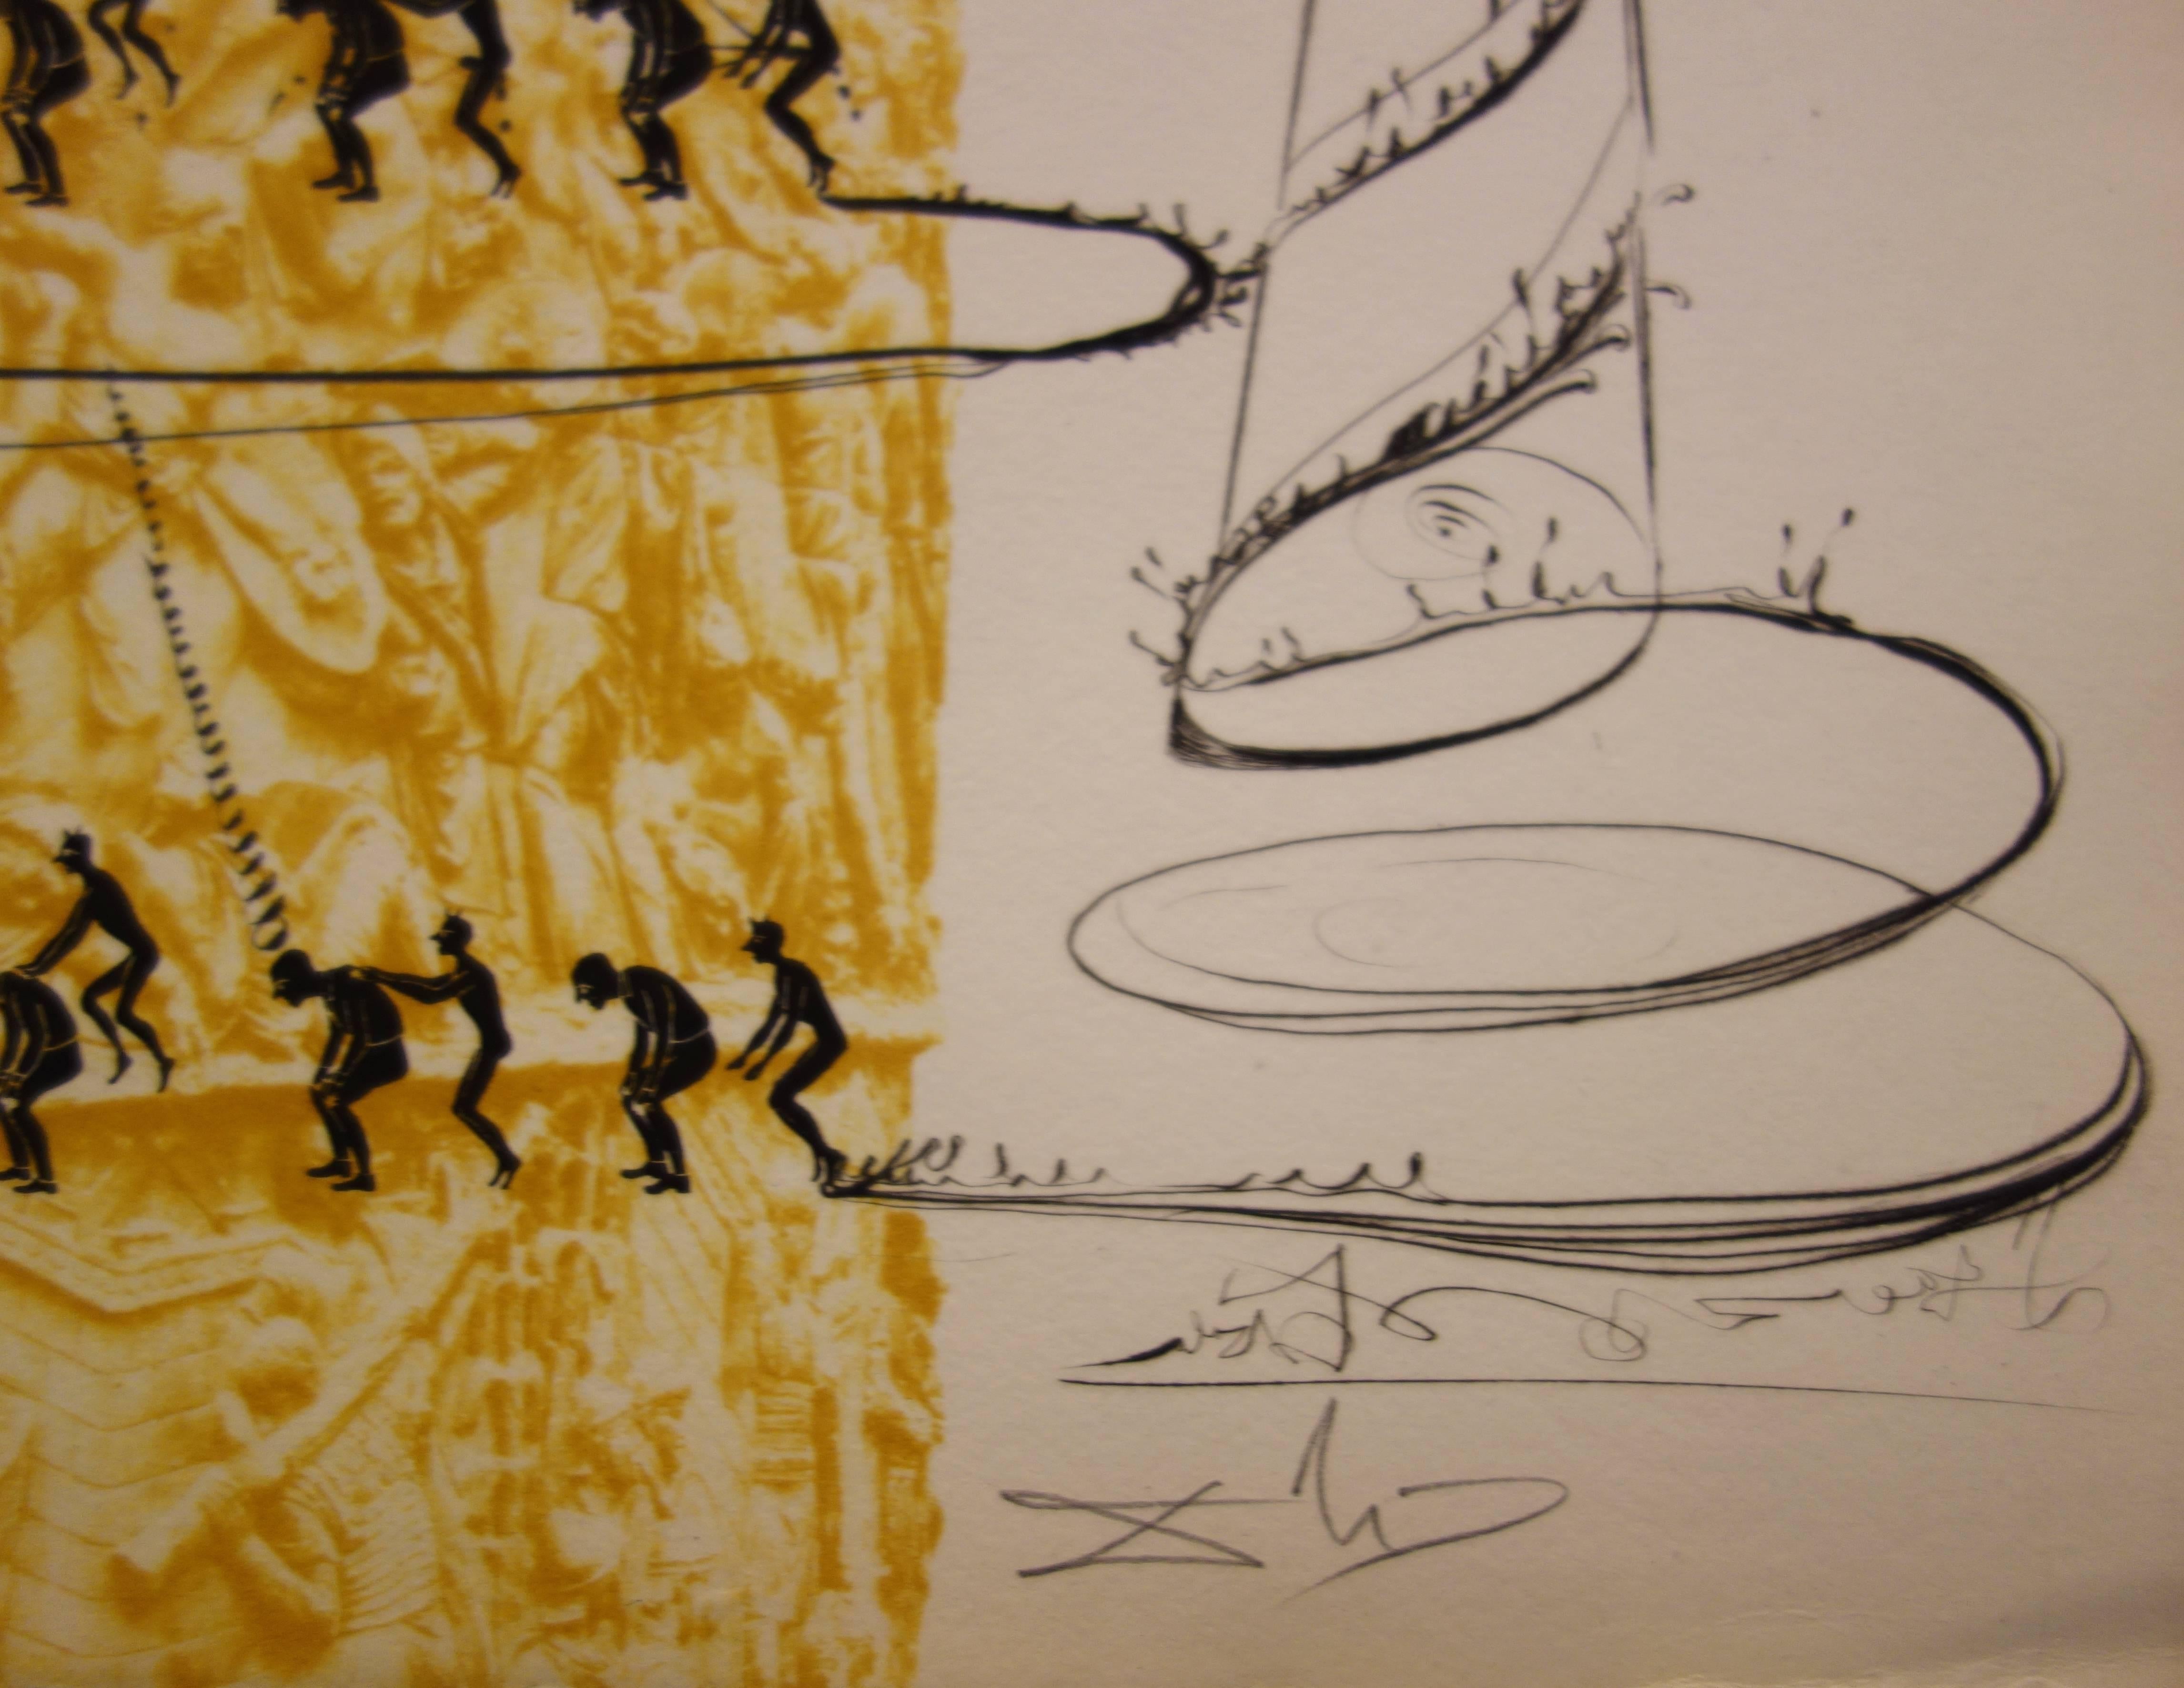 Salvador Dali (1904-1989) 
Le système caga y menja (1973) 

Original Etching on Auvergne vellum
Handsigned in pencil
Numbered /Z
Size : 15.3 x 22,4 inch (39 x 57 cm) 

References : Catalog raisonné Field 73-20I / Michler and Lopsinger 571

Excellent